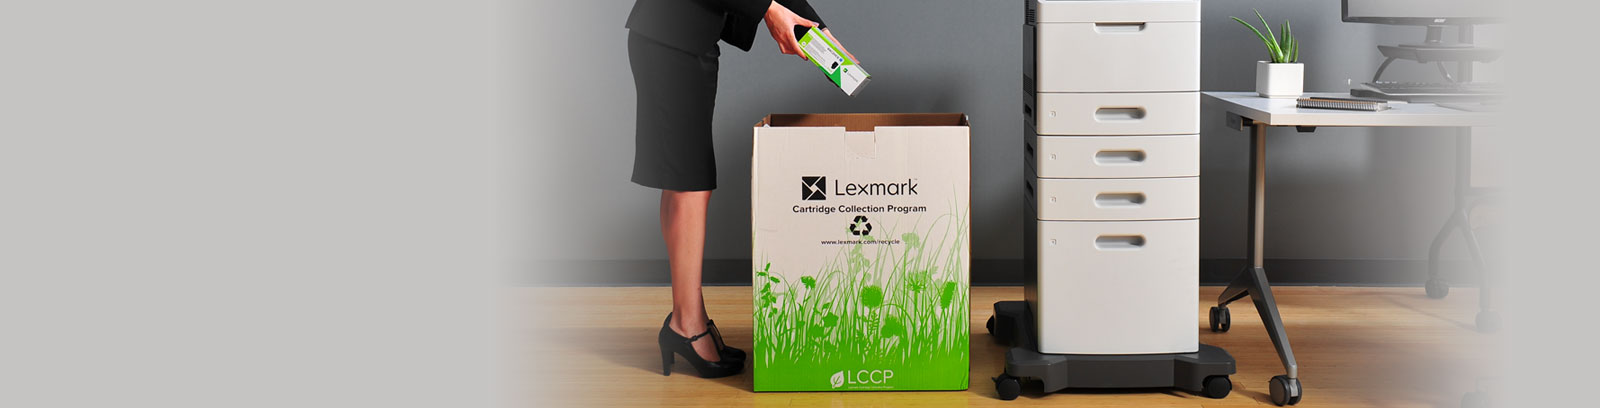 Lexmark Cartridge Collection Program